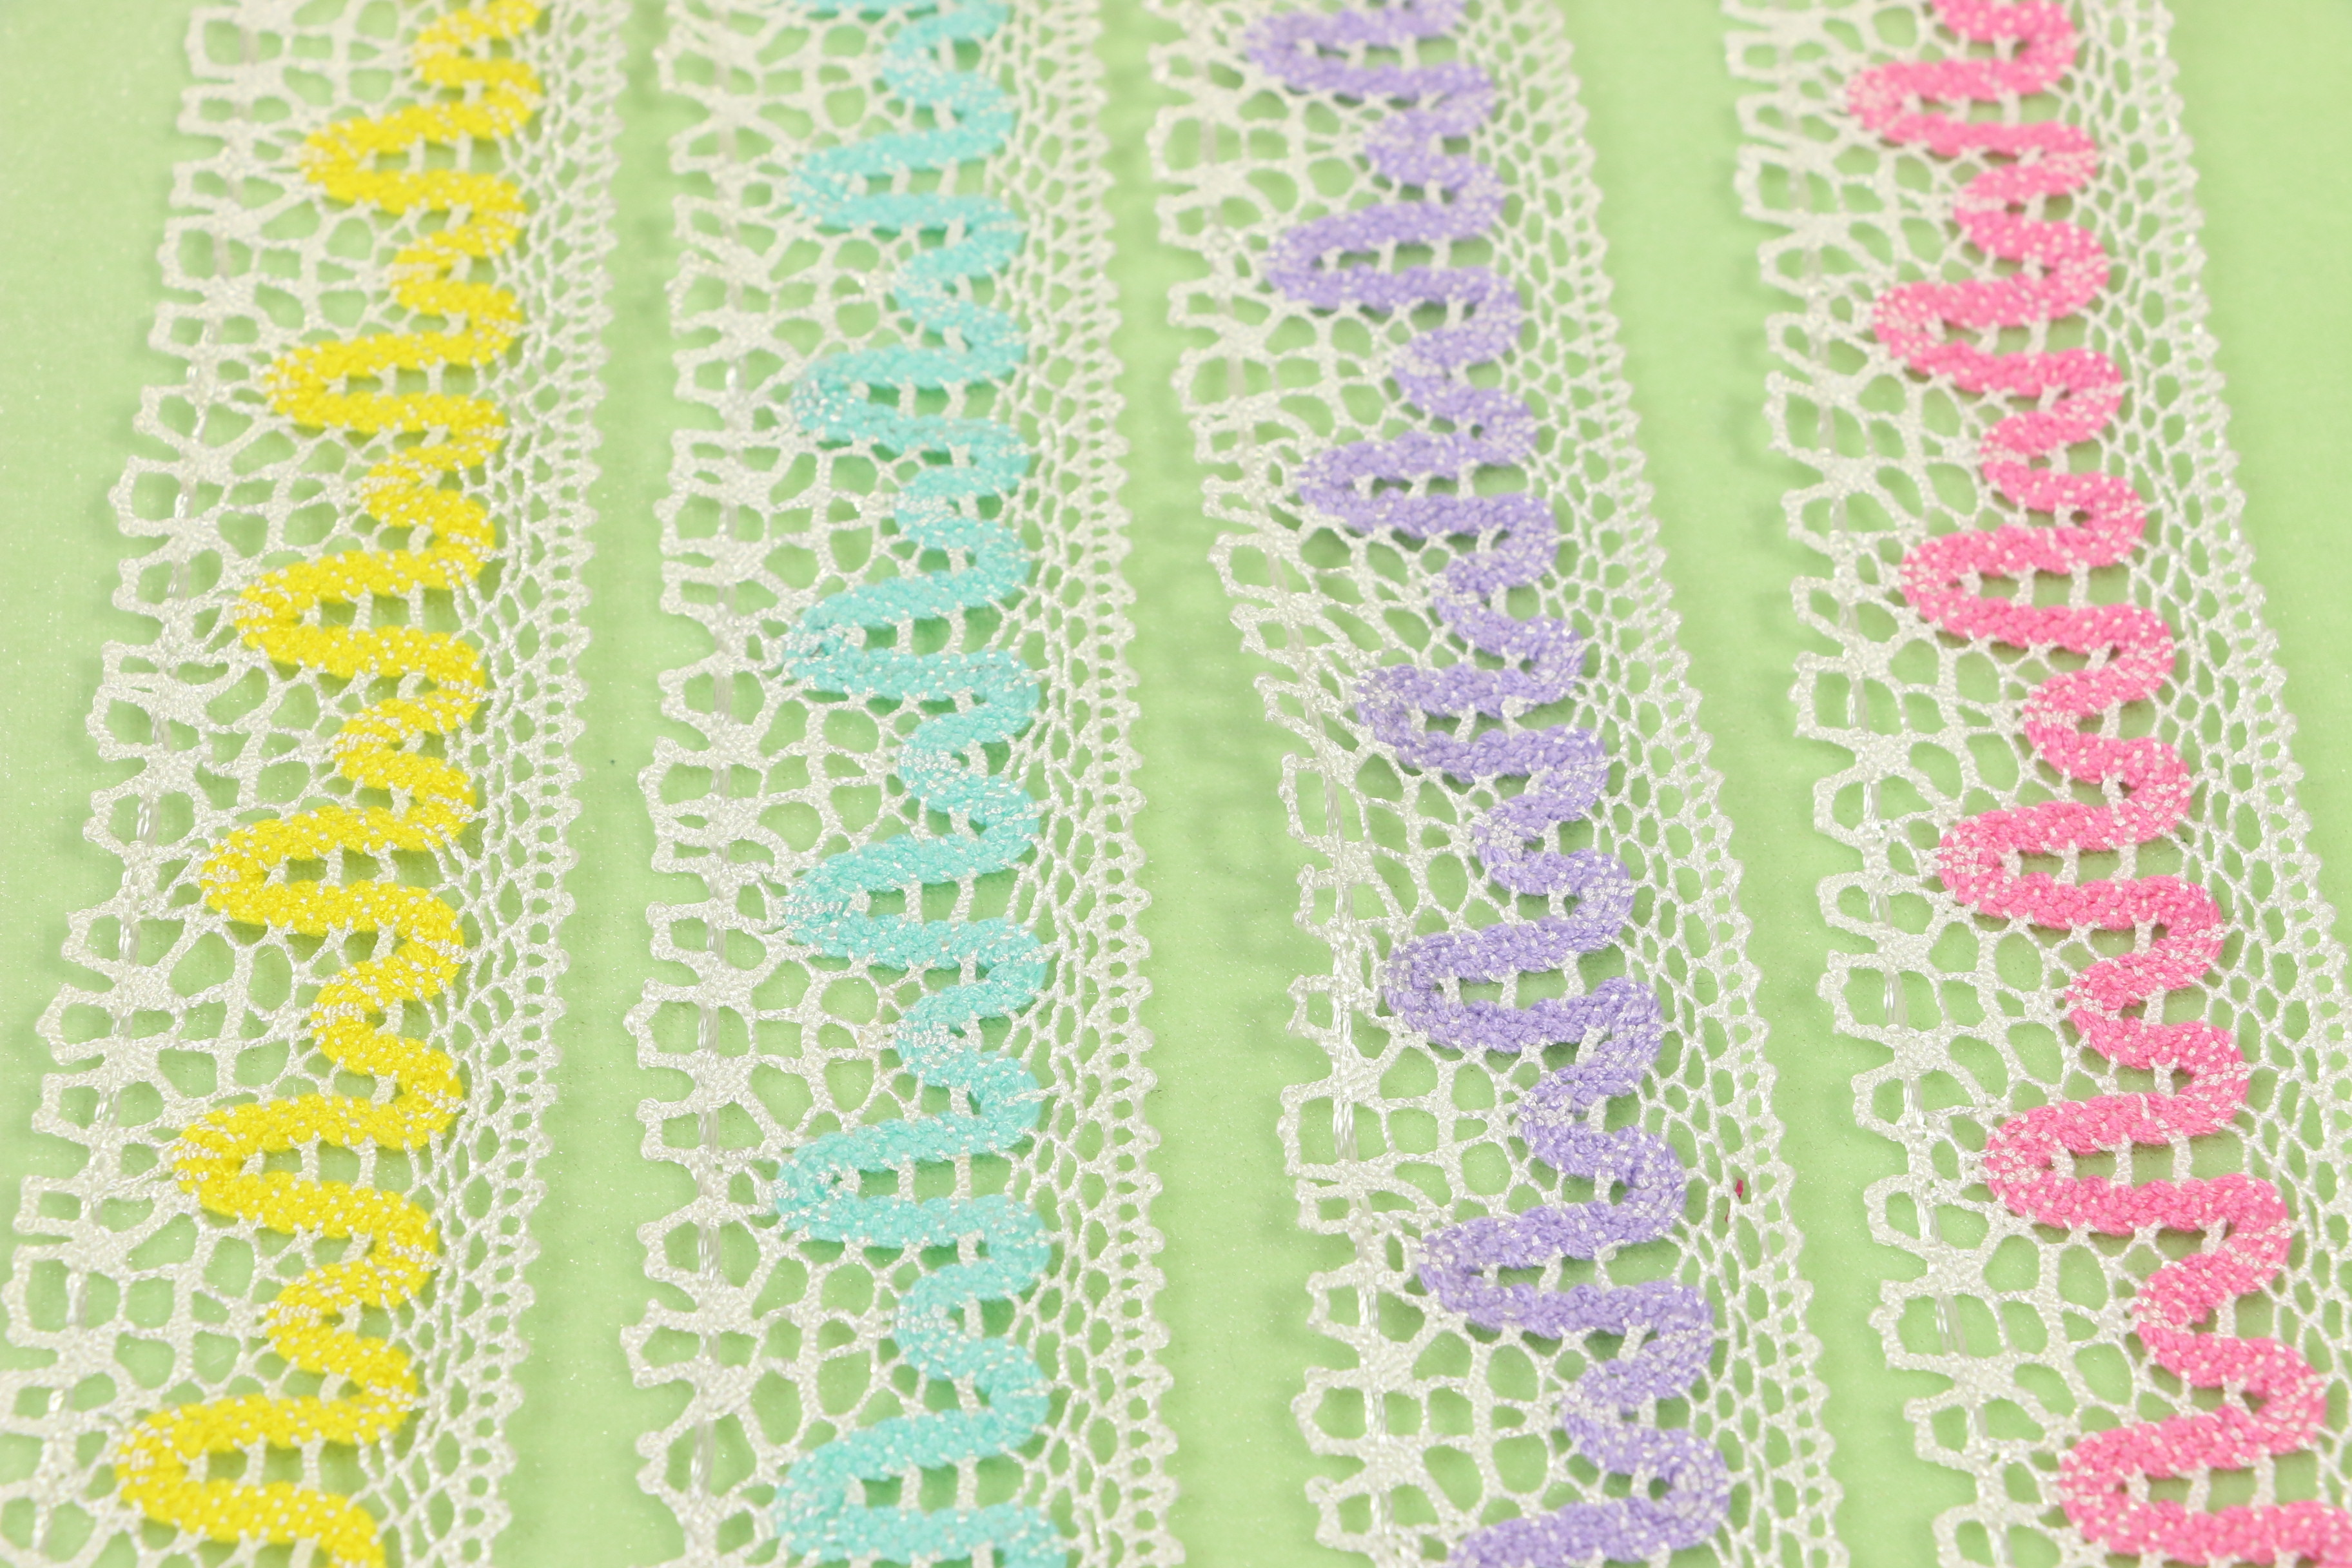  Recyclable Cotton Crochet Lace Trim Reusable Unstretched Contrast Patterned Manufactures